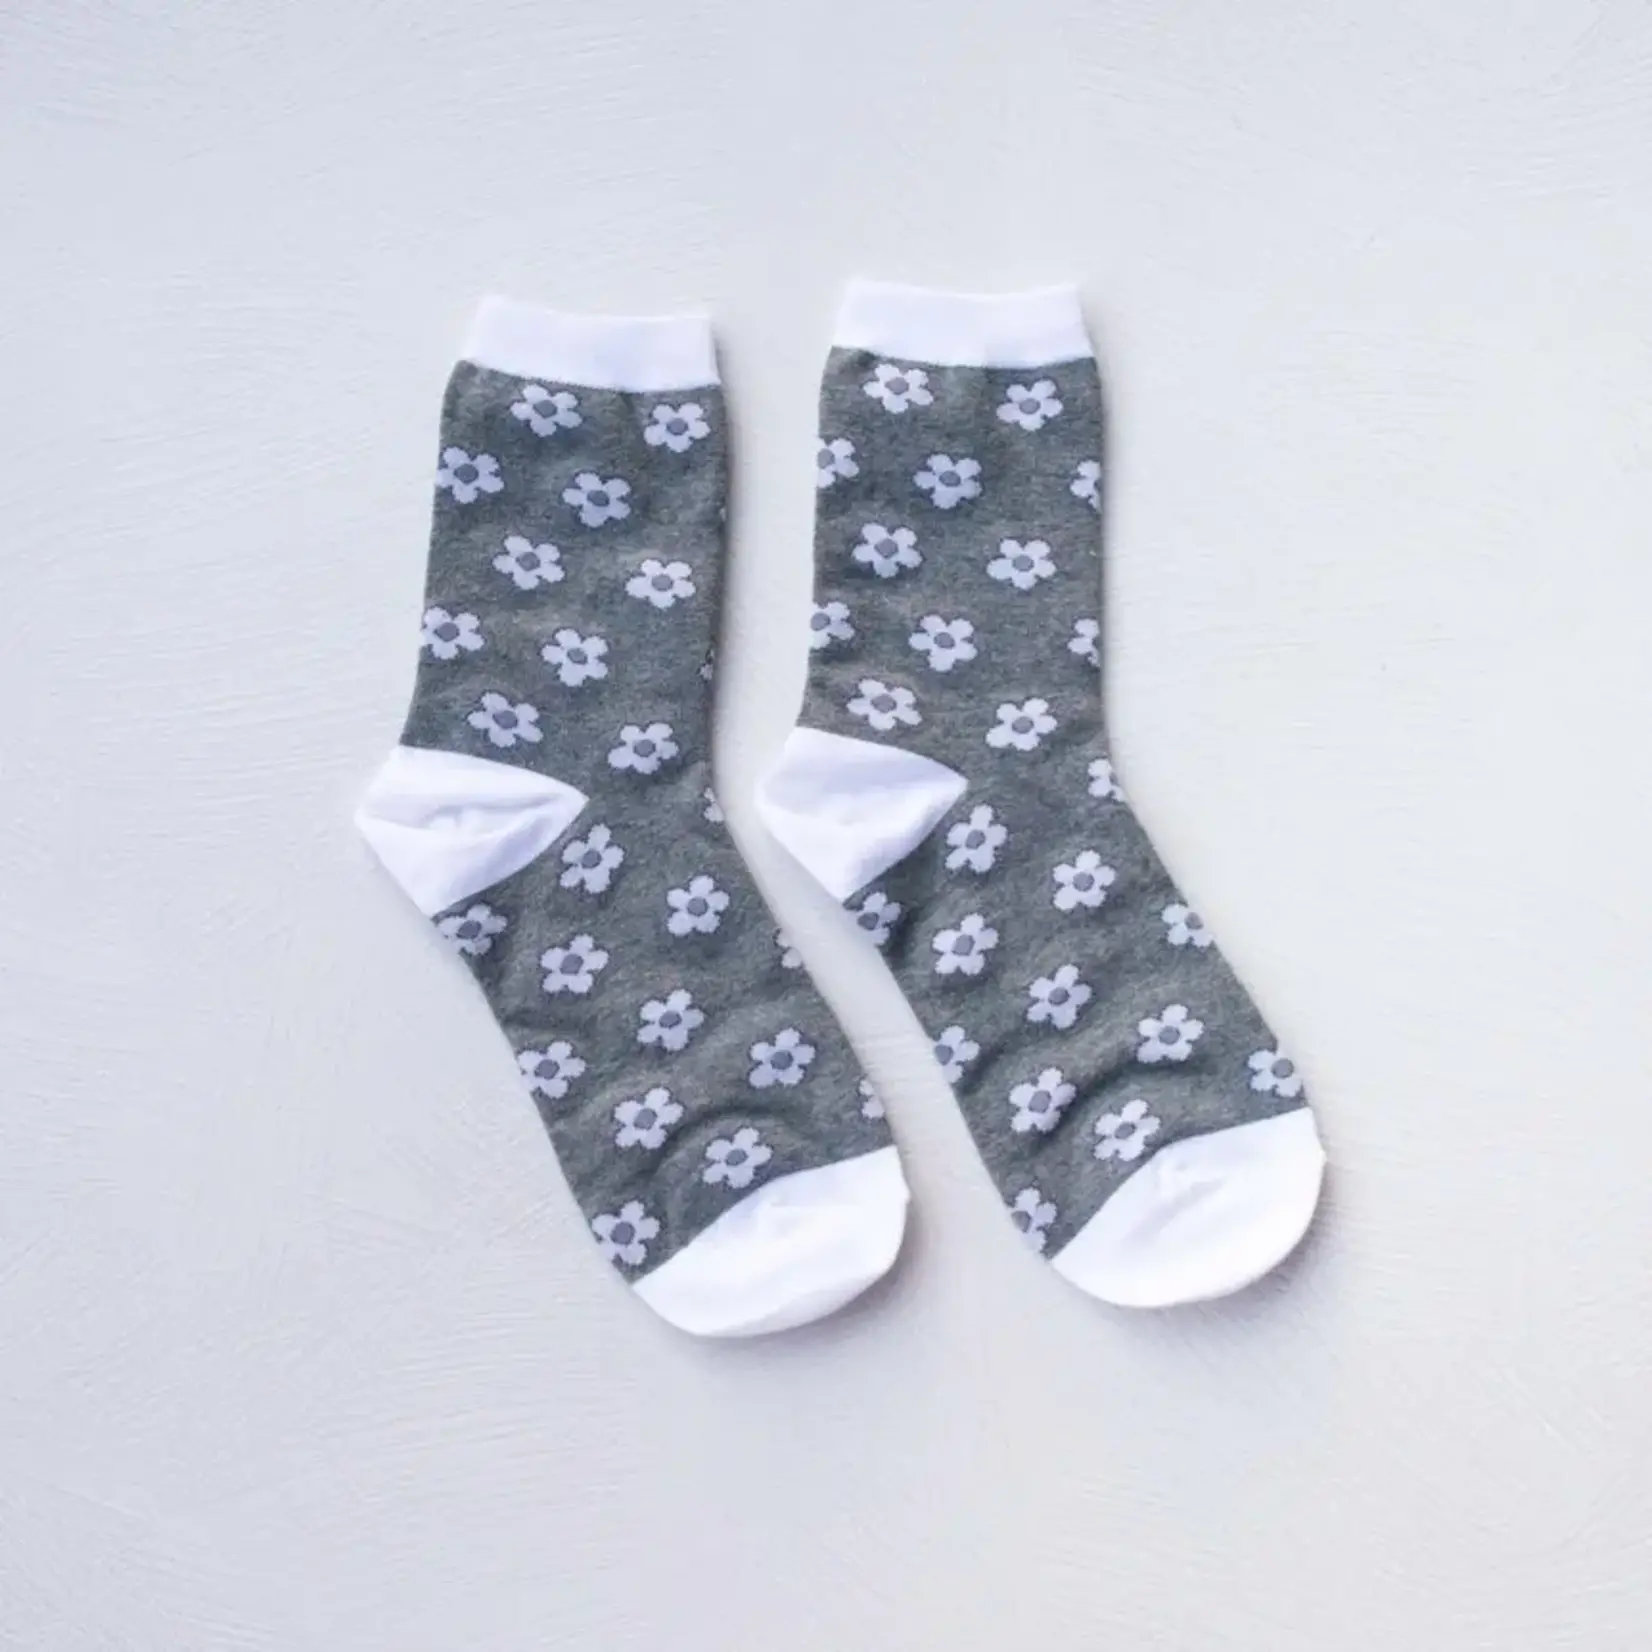 Tiepology Doodle Flower Crew Socks - White/Grey